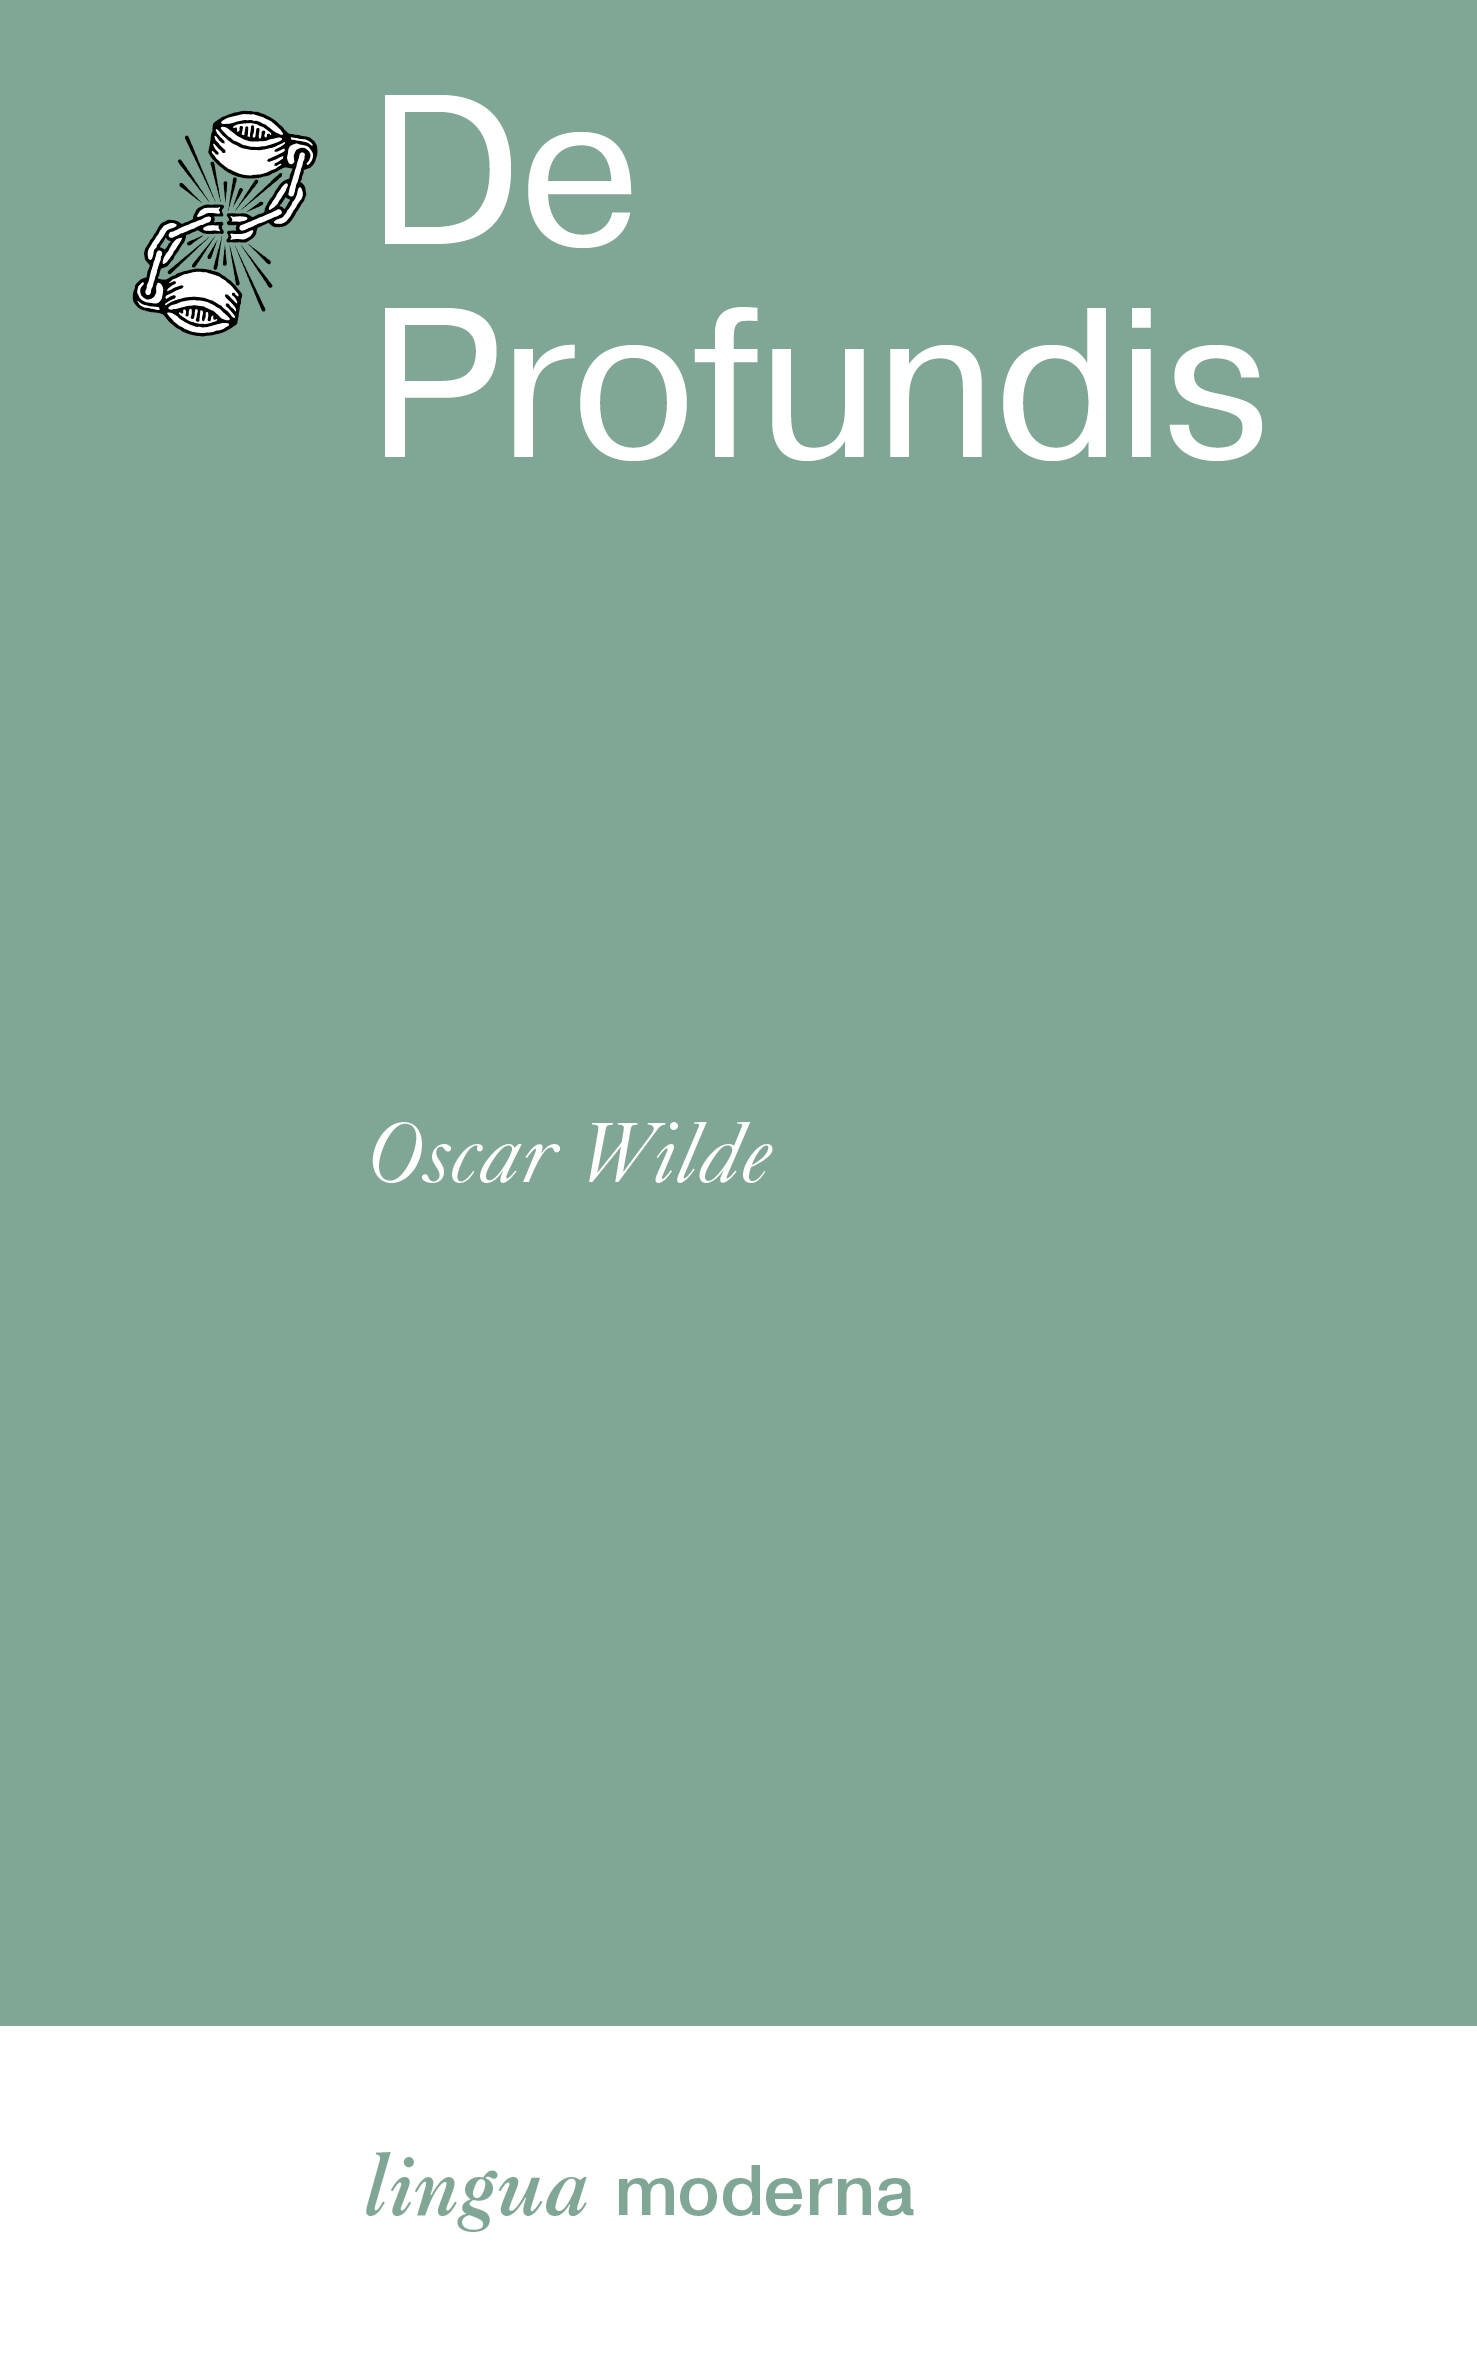 Book “De Profundis” by Оскар Уайльд — 2023